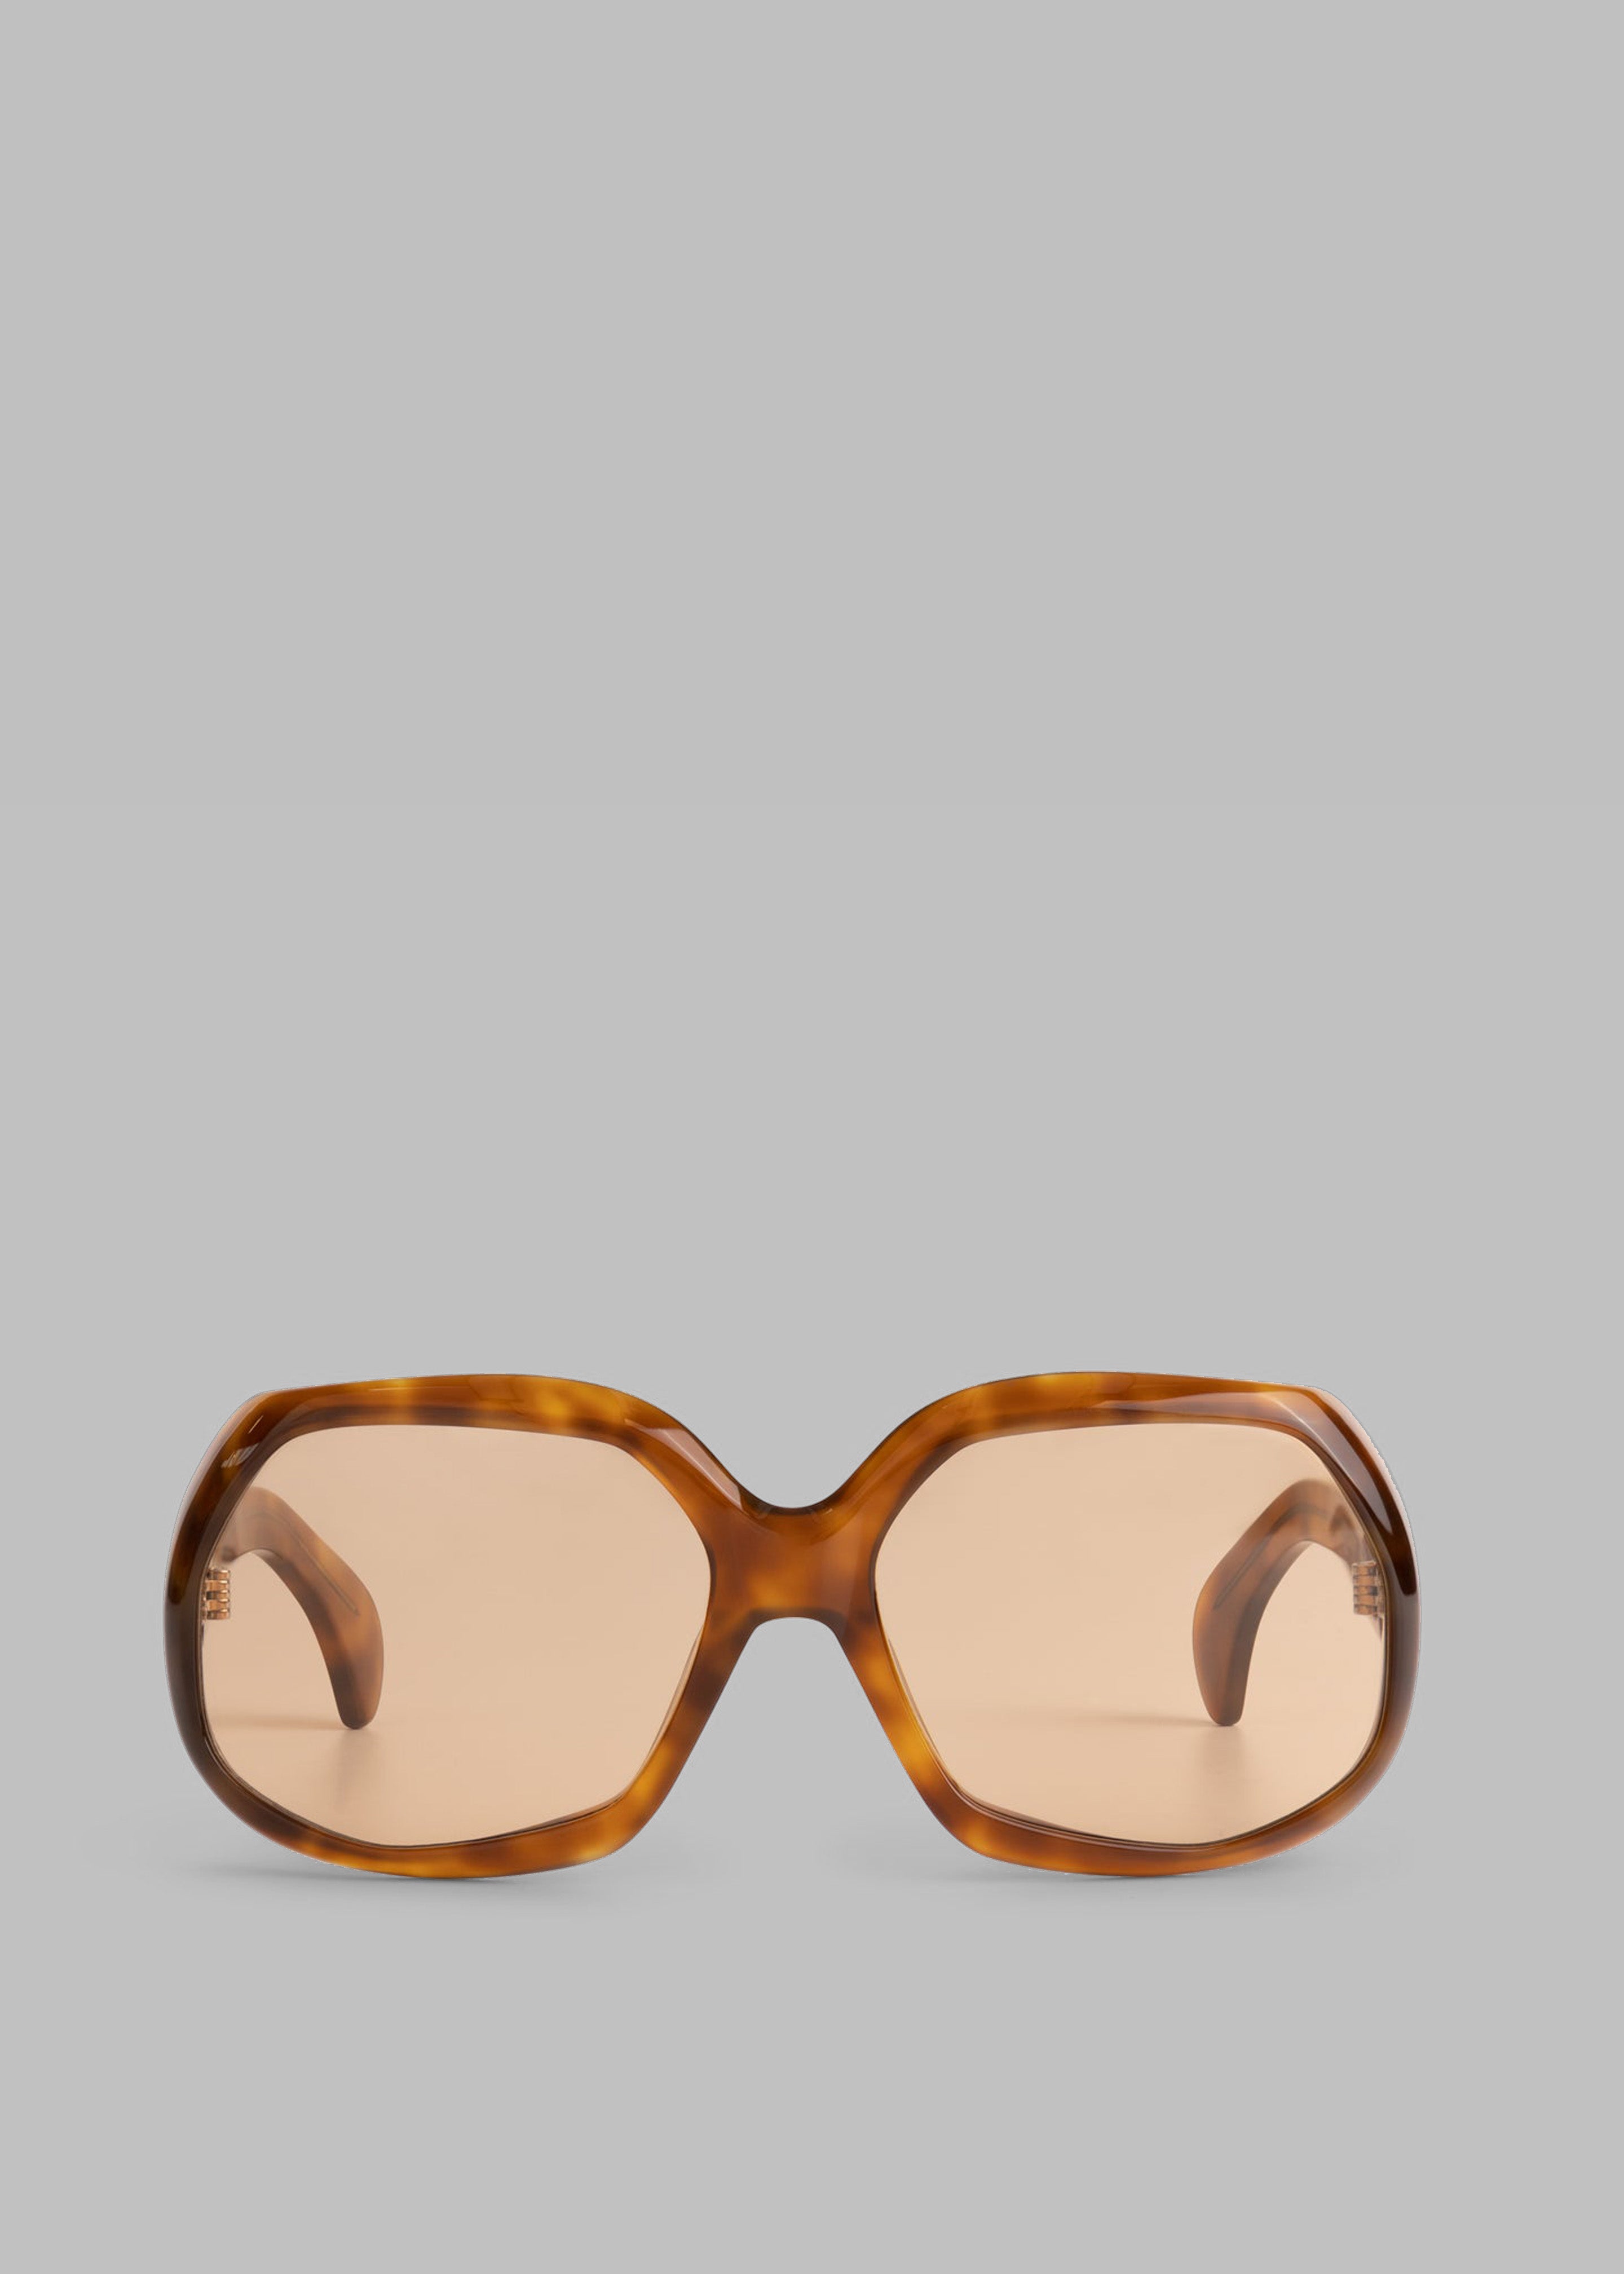 Port Tanger Yamina Sunglasses - Oliban Acetate Amber Lens - 4